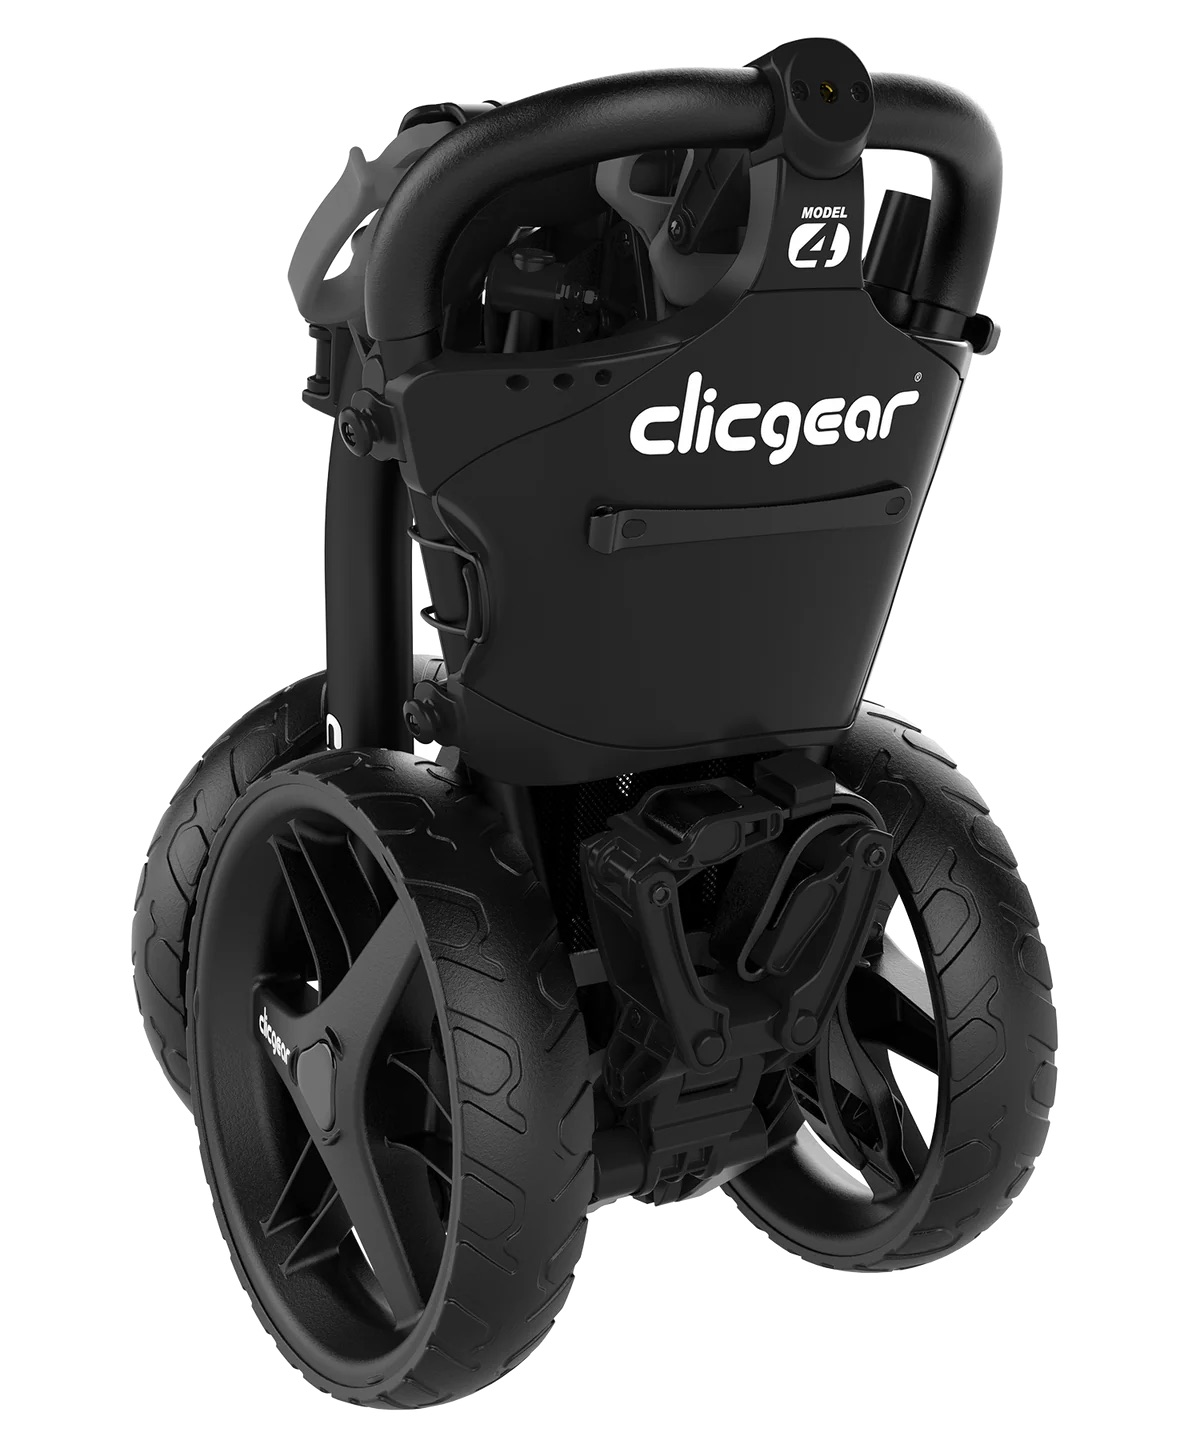 Clicgear | 4.0 | Black